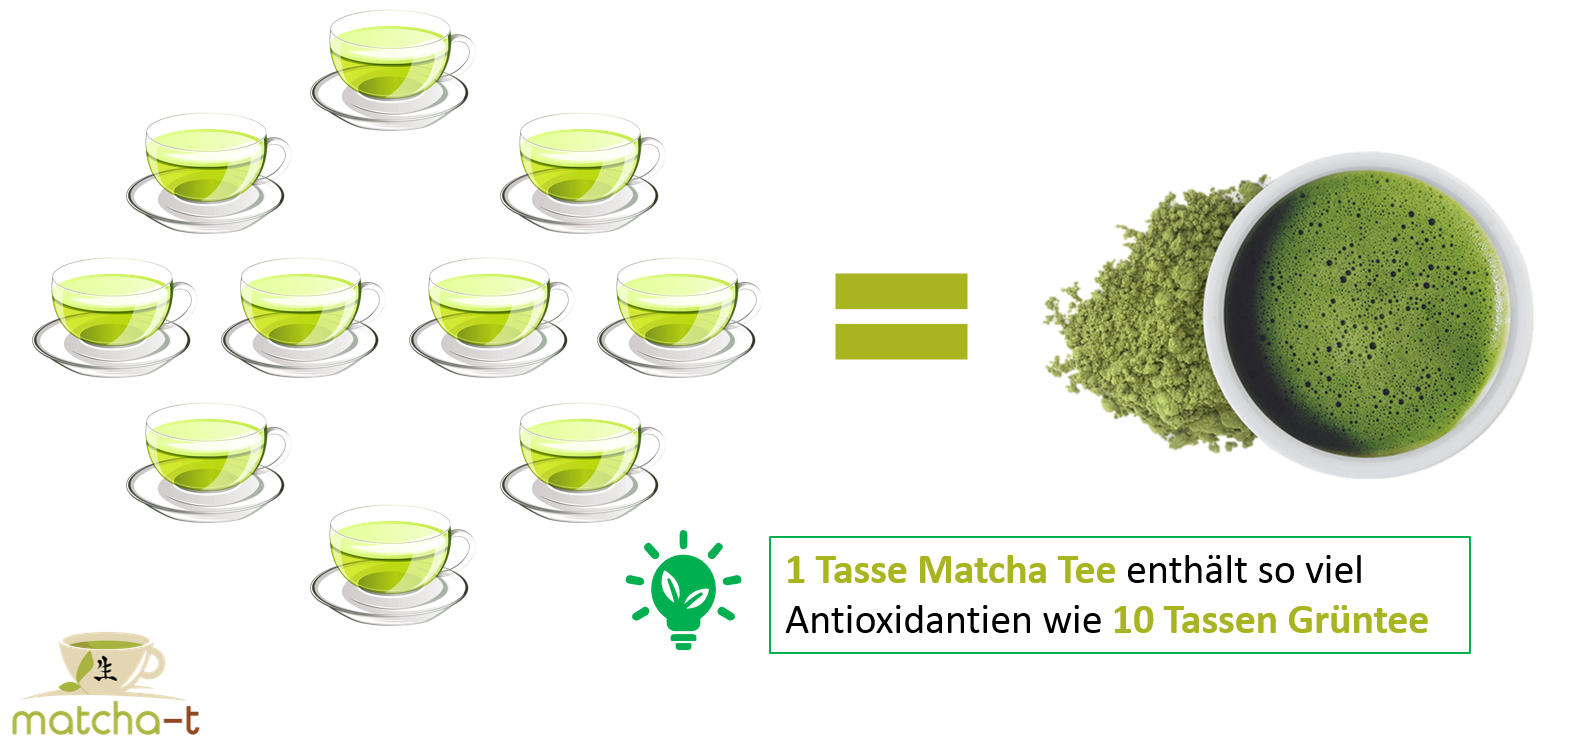 Matcha Tee vs. Grüntee